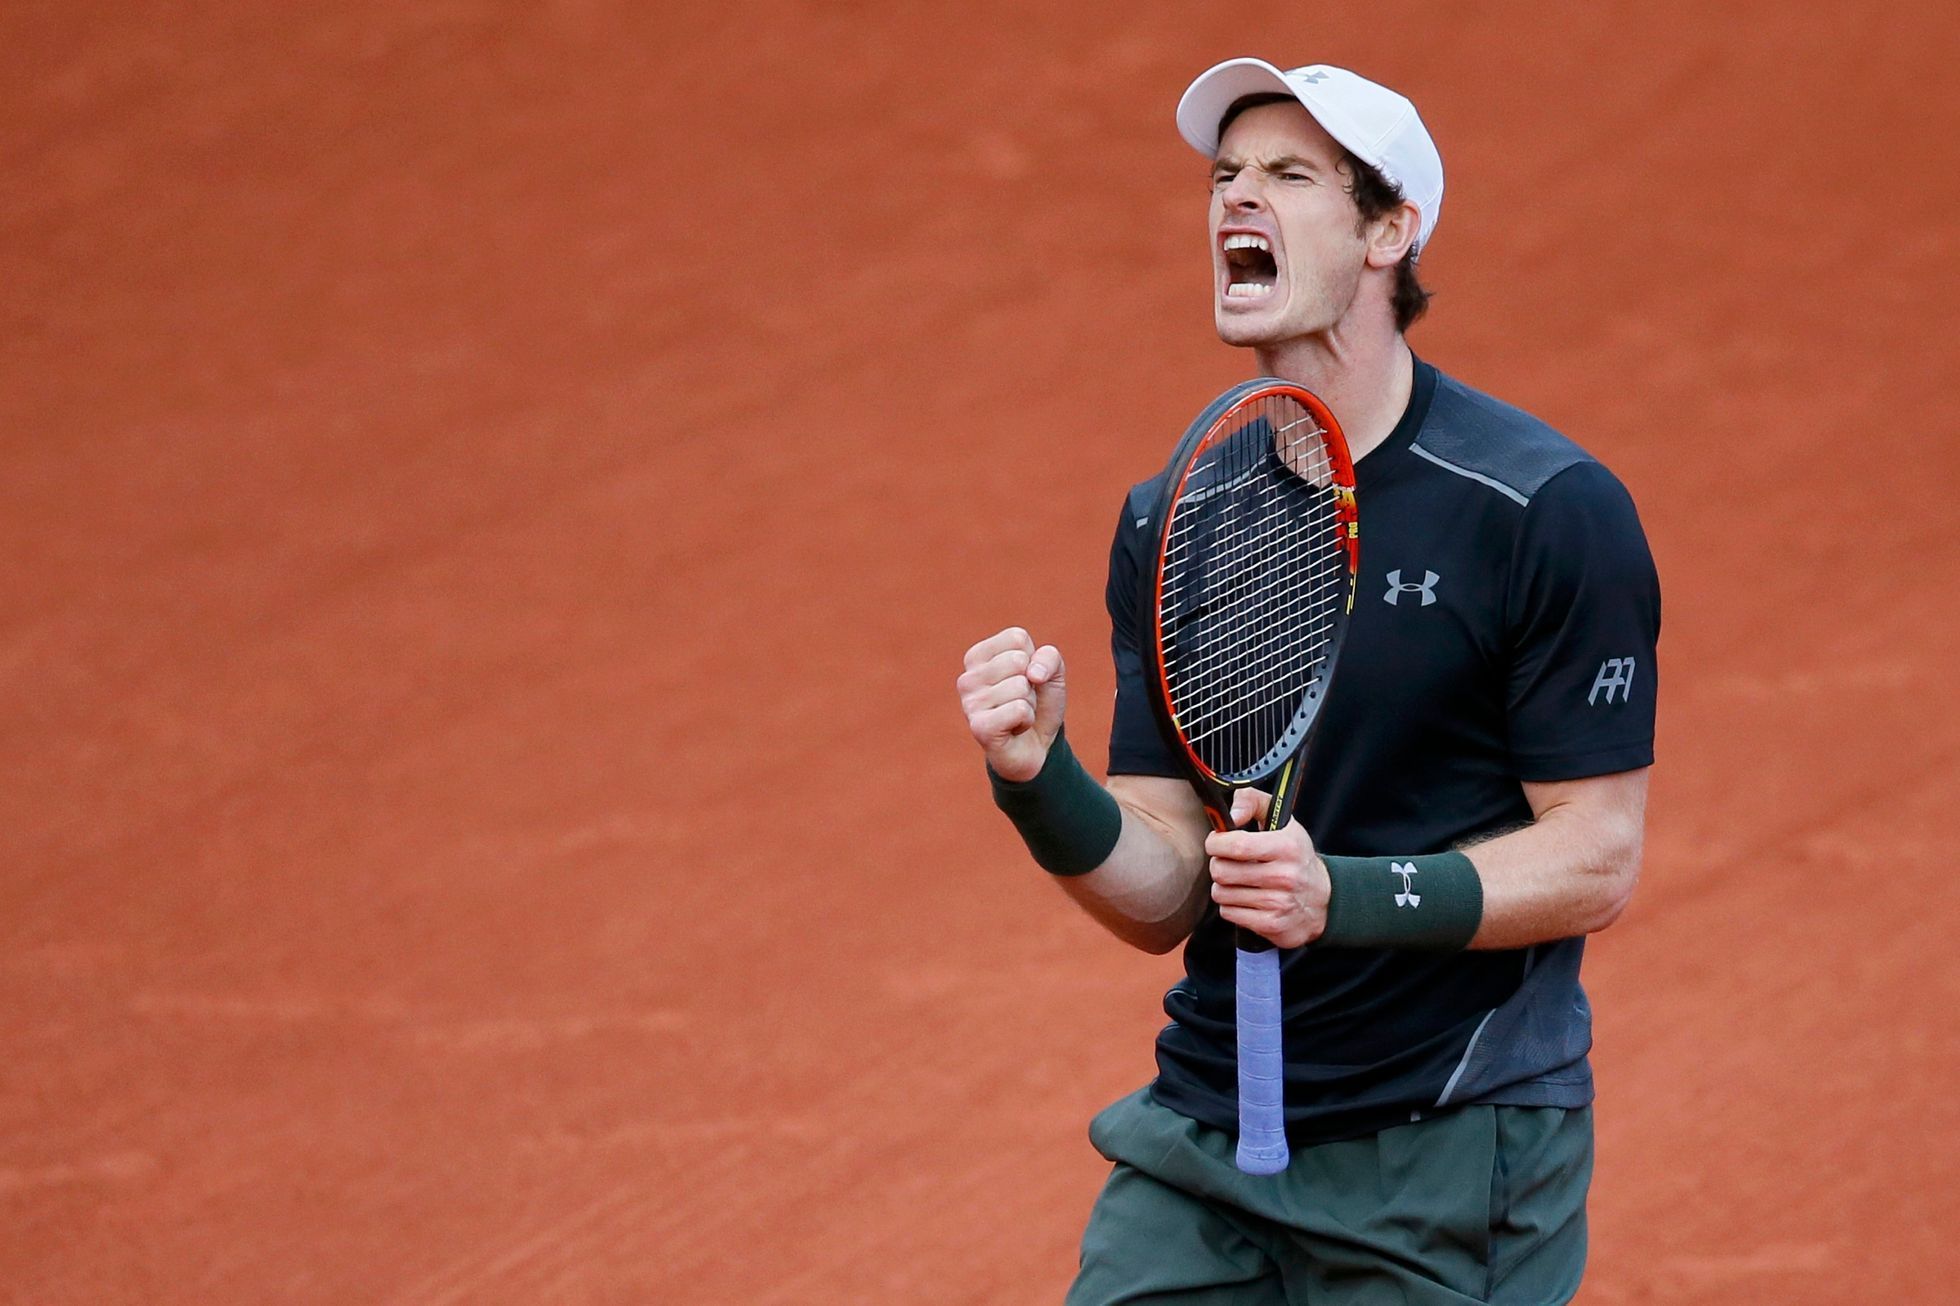 Roland Garros 2016: Andy Murray v zápase proti Radku Štěpánkovi